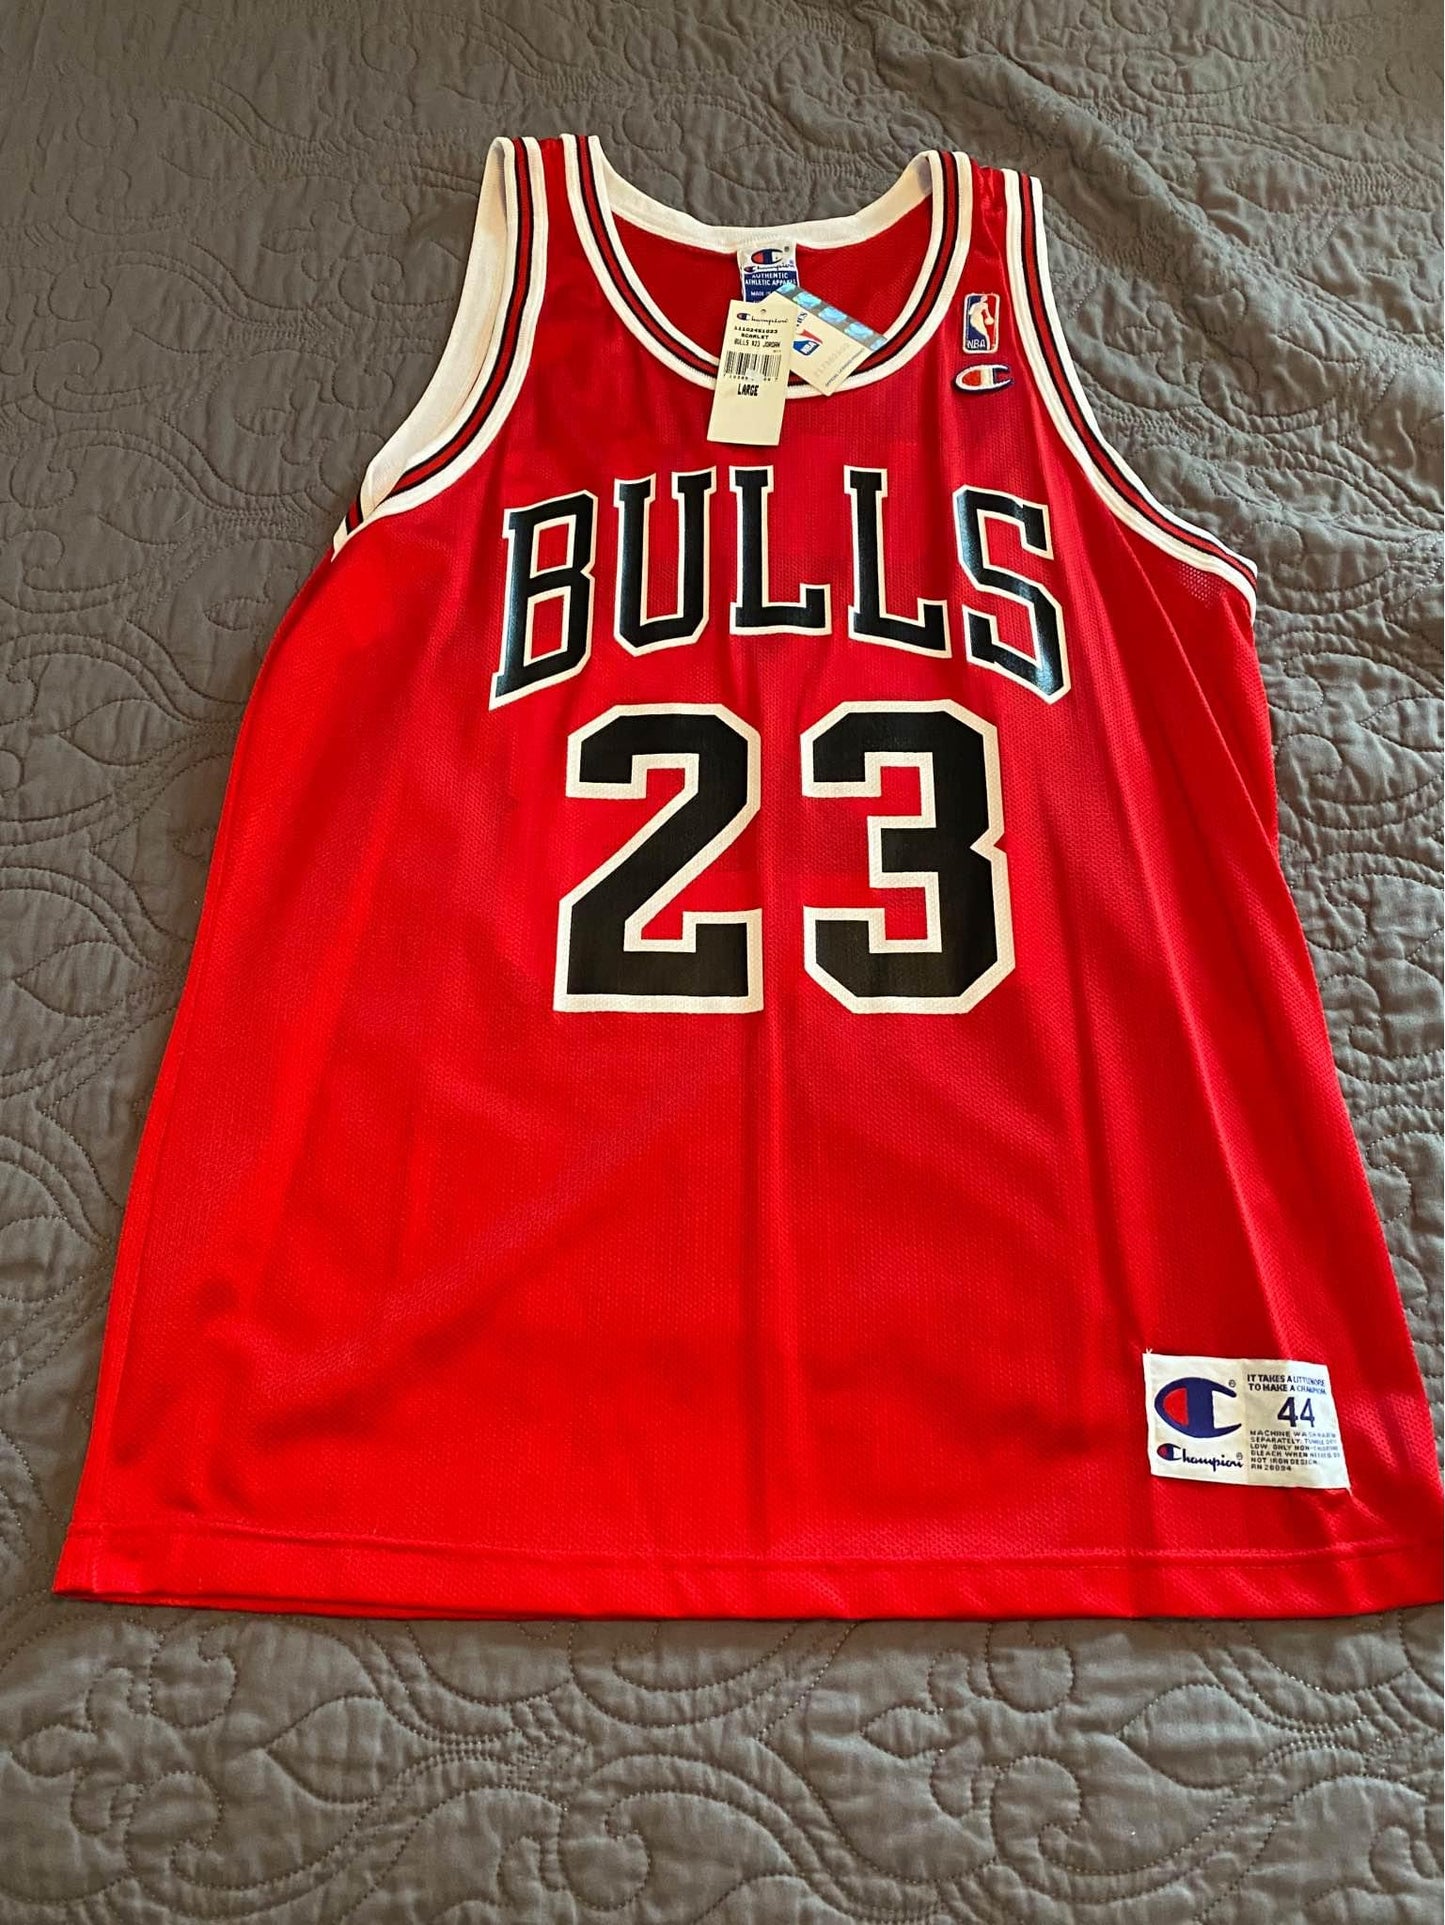 new chicago bulls jersey